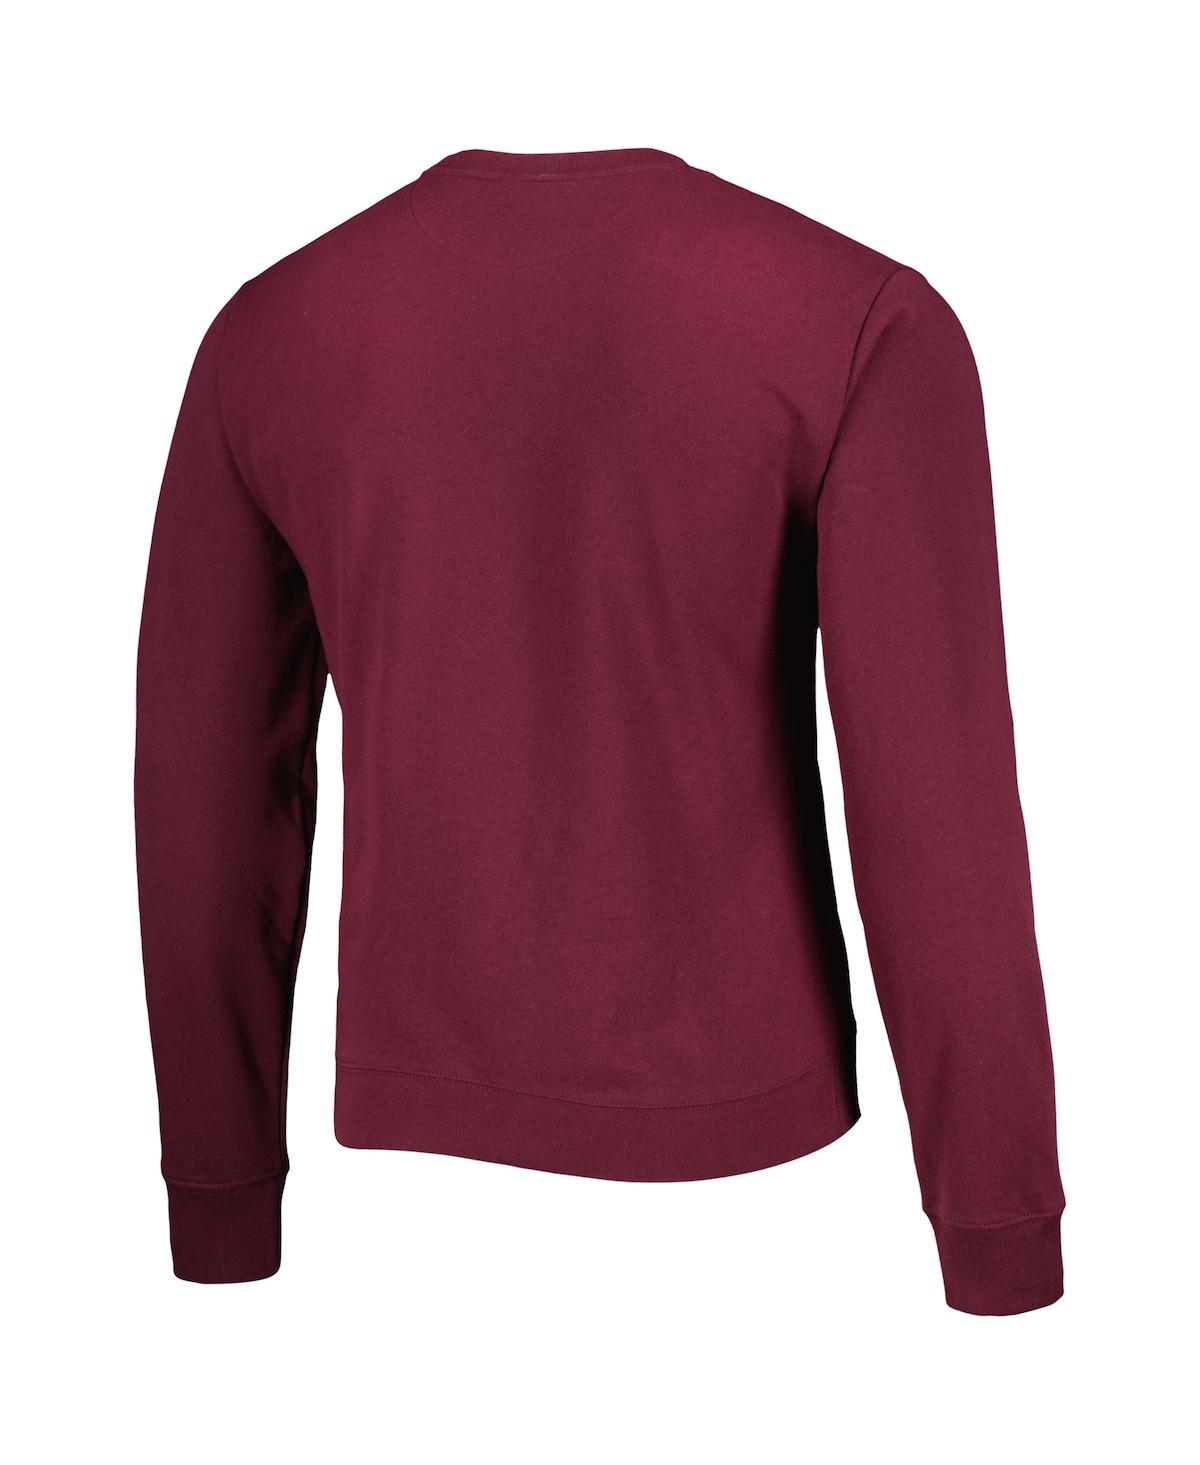 Shop League Collegiate Wear Men's  Maroon Arizona State Sun Devils 1965 Arch Essential Pullover Sweatshirt